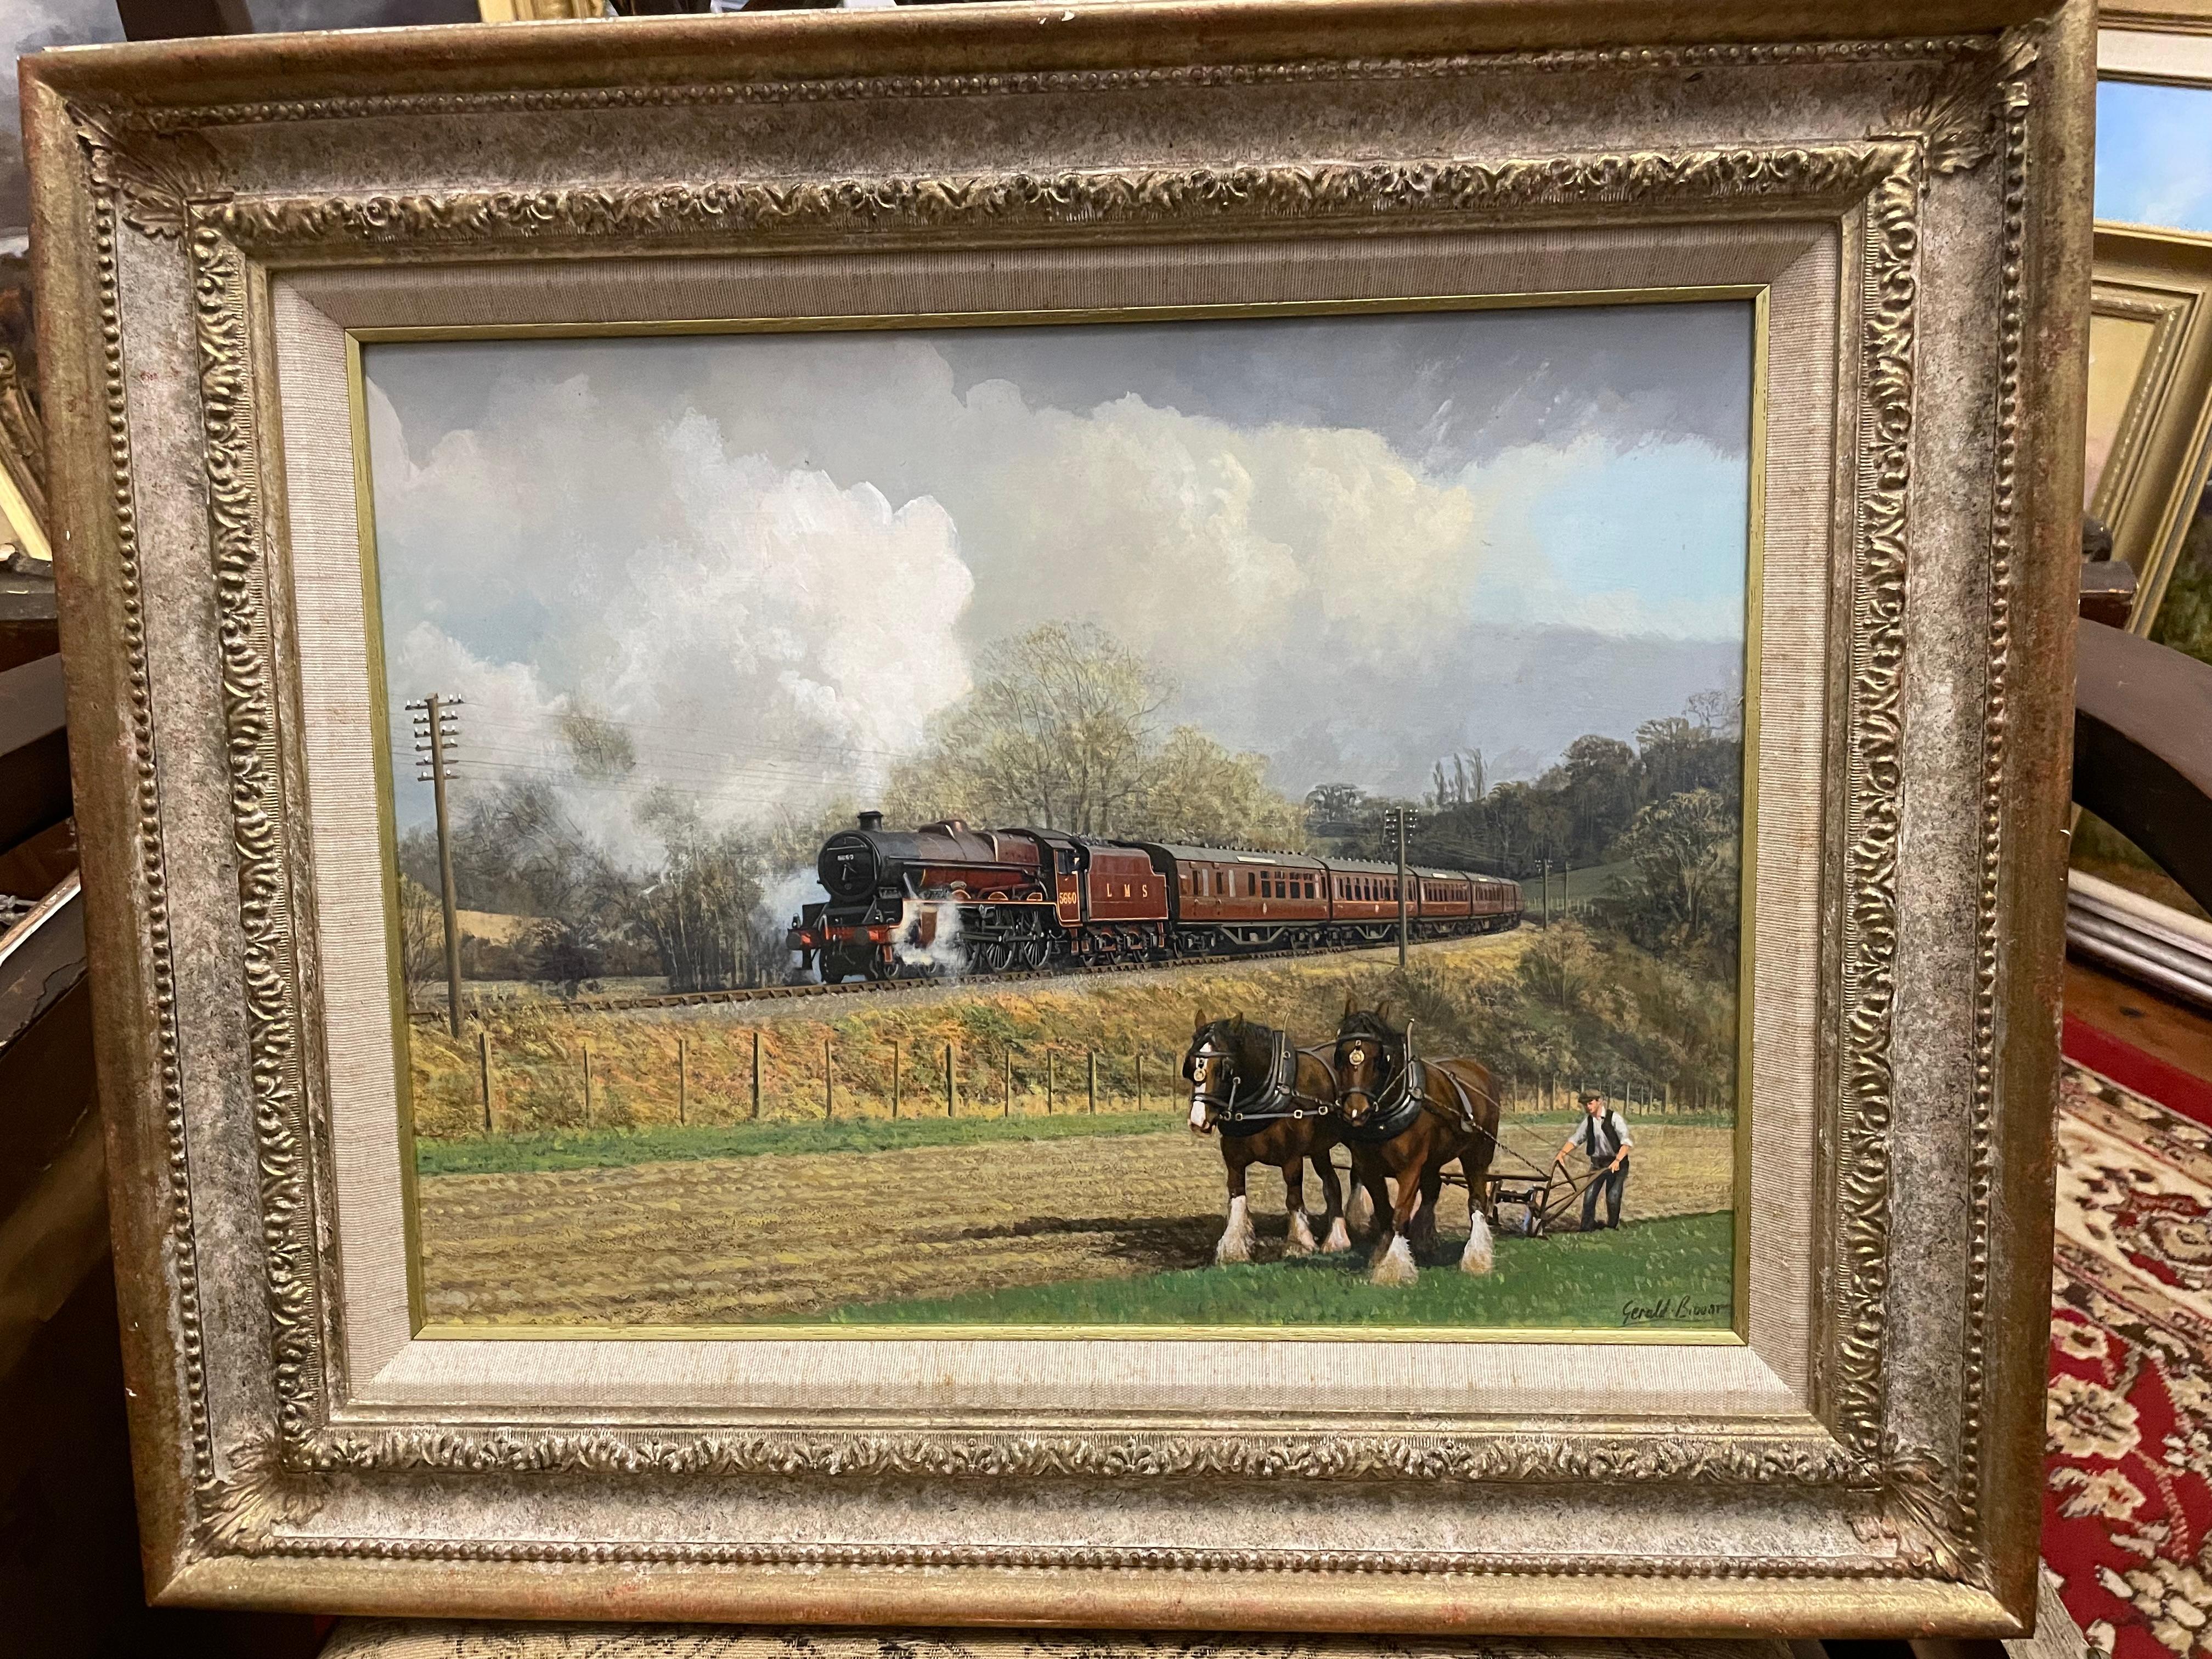 LMS Locomotive passing Ploughman - Beige Landscape Painting by Gerald Bloom